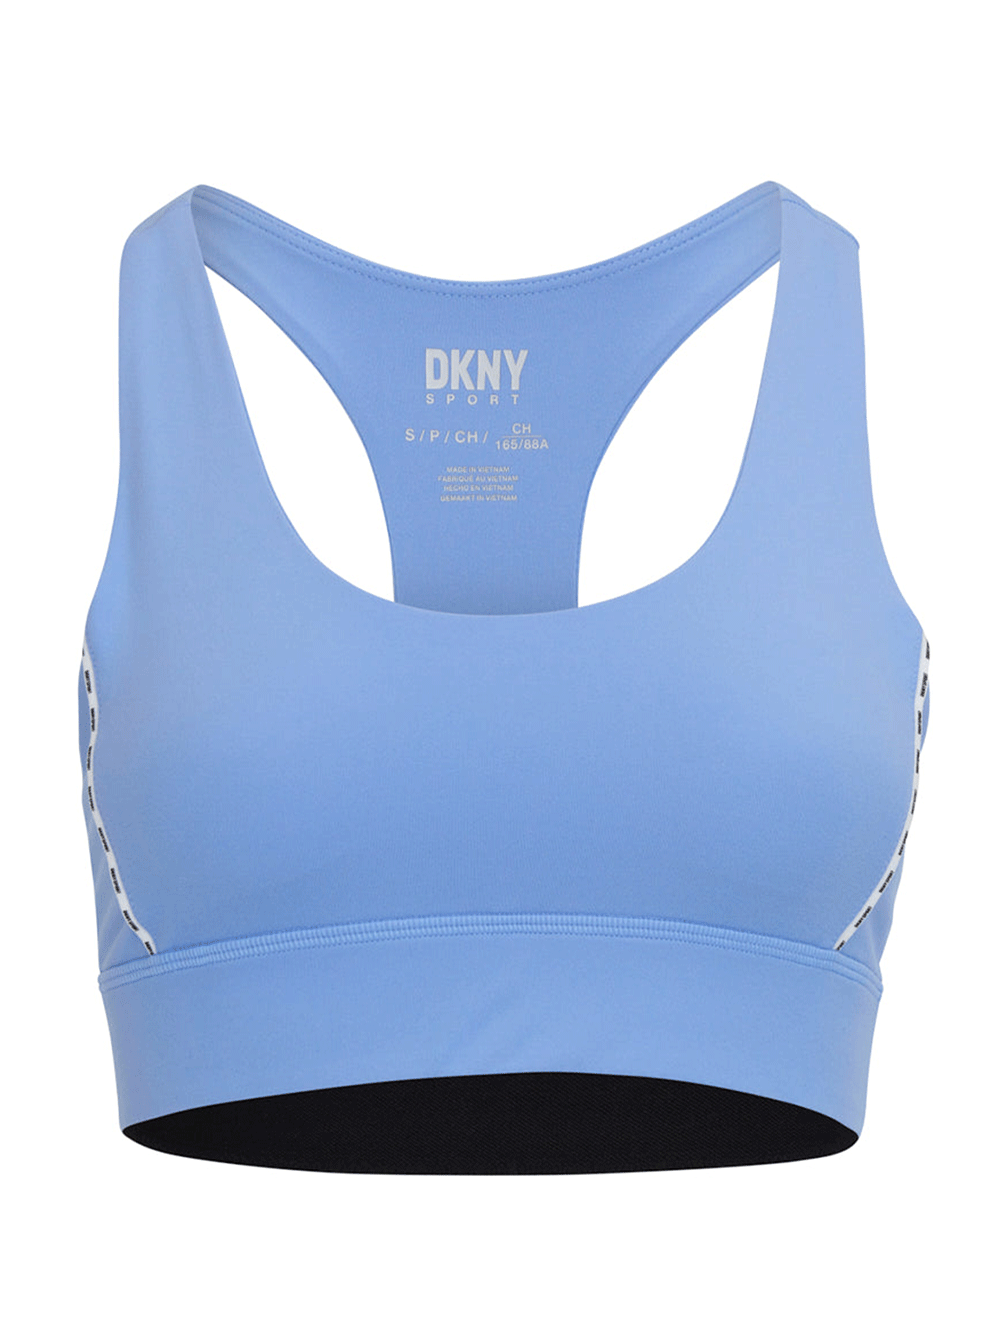 DKNY-Sport-Fitness-Piping-Scoop-Neck-Bra-Blue-1